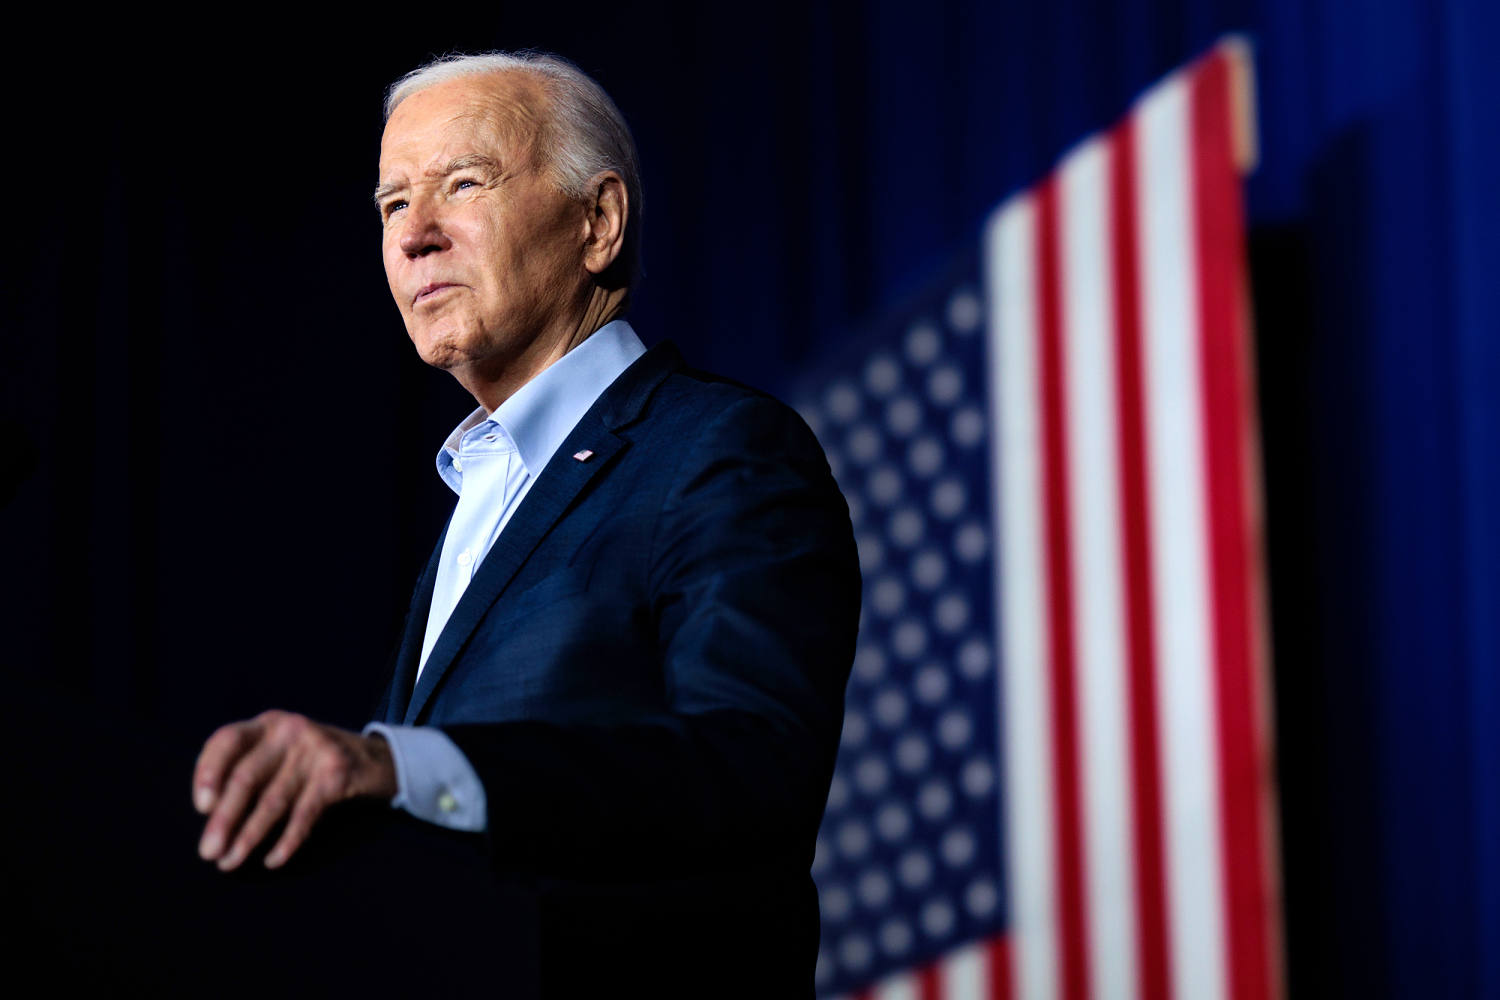 Biden says U.S. won't transfer offensive weapons if Israel invades Rafah